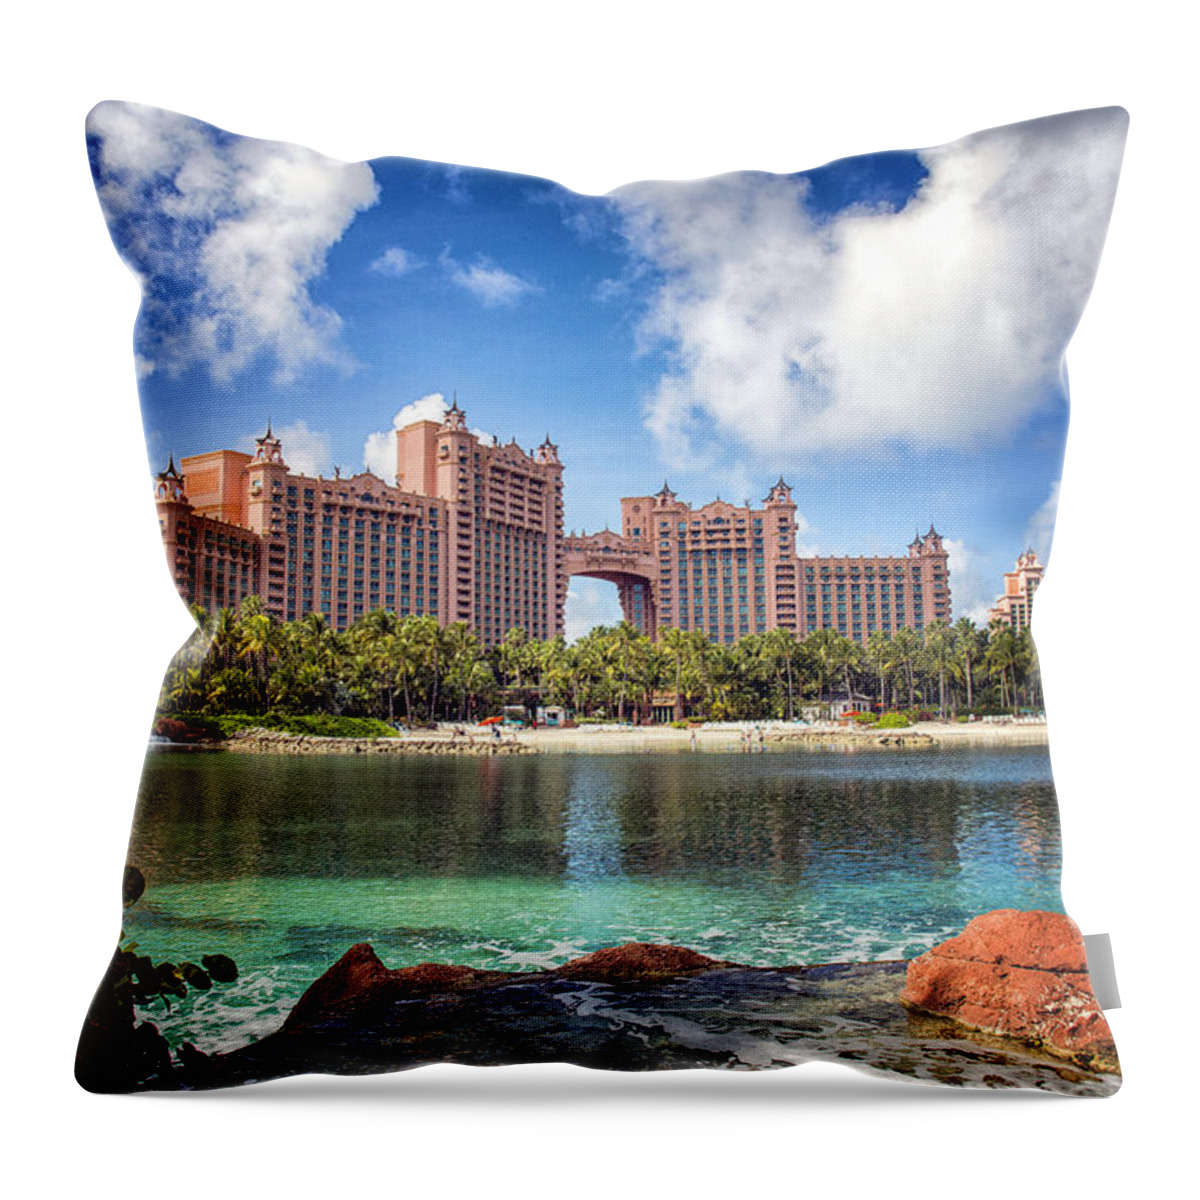 Atlantis Throw Pillow featuring the photograph Atlantis Resort - Paradise Island - - Bahamas by Jon Berghoff